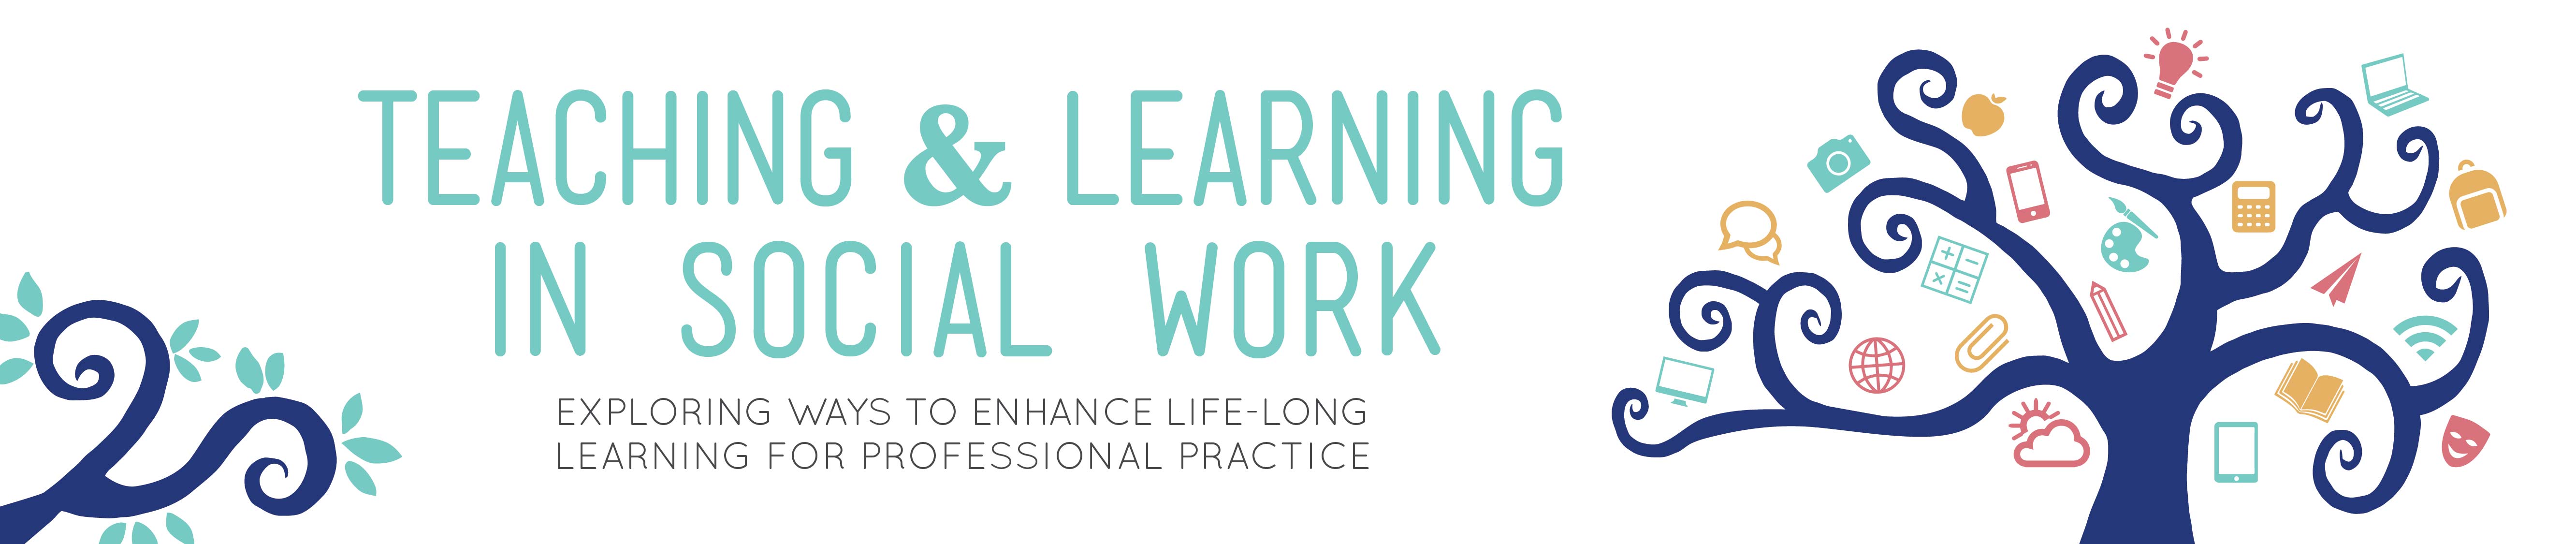 Teaching & Learning in Social Work